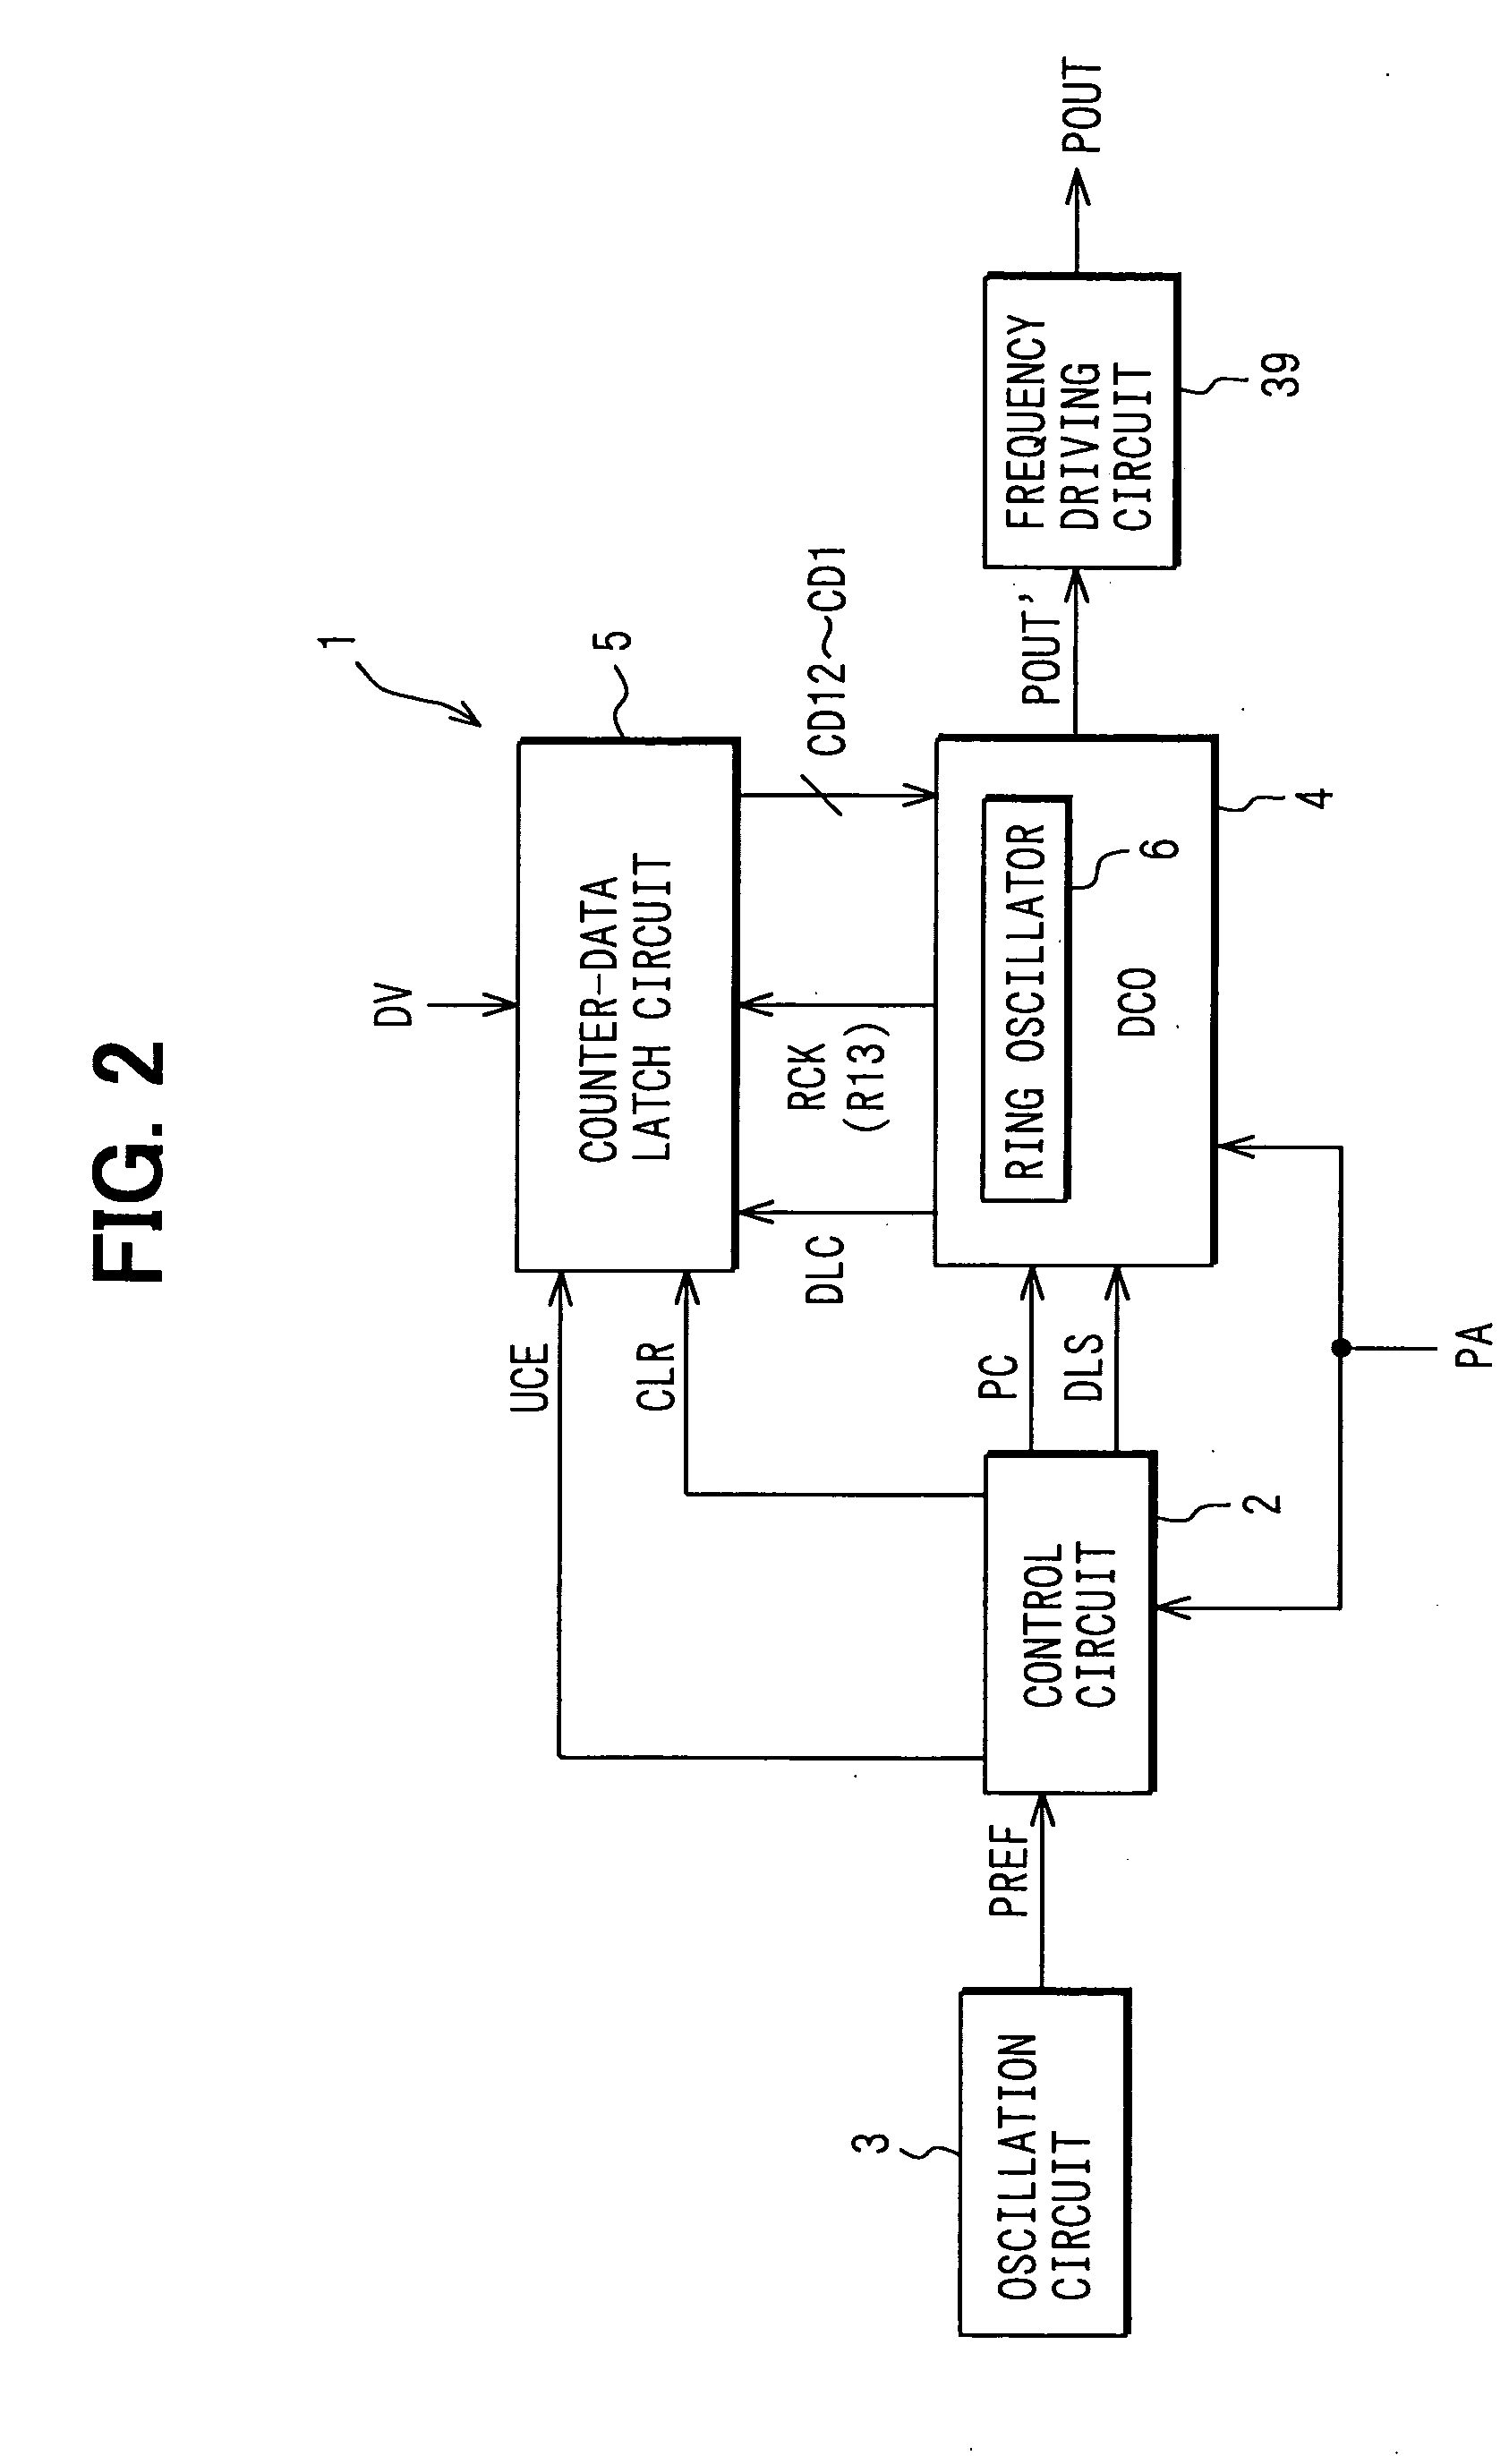 Integrated circuit device having clock signal output circuit